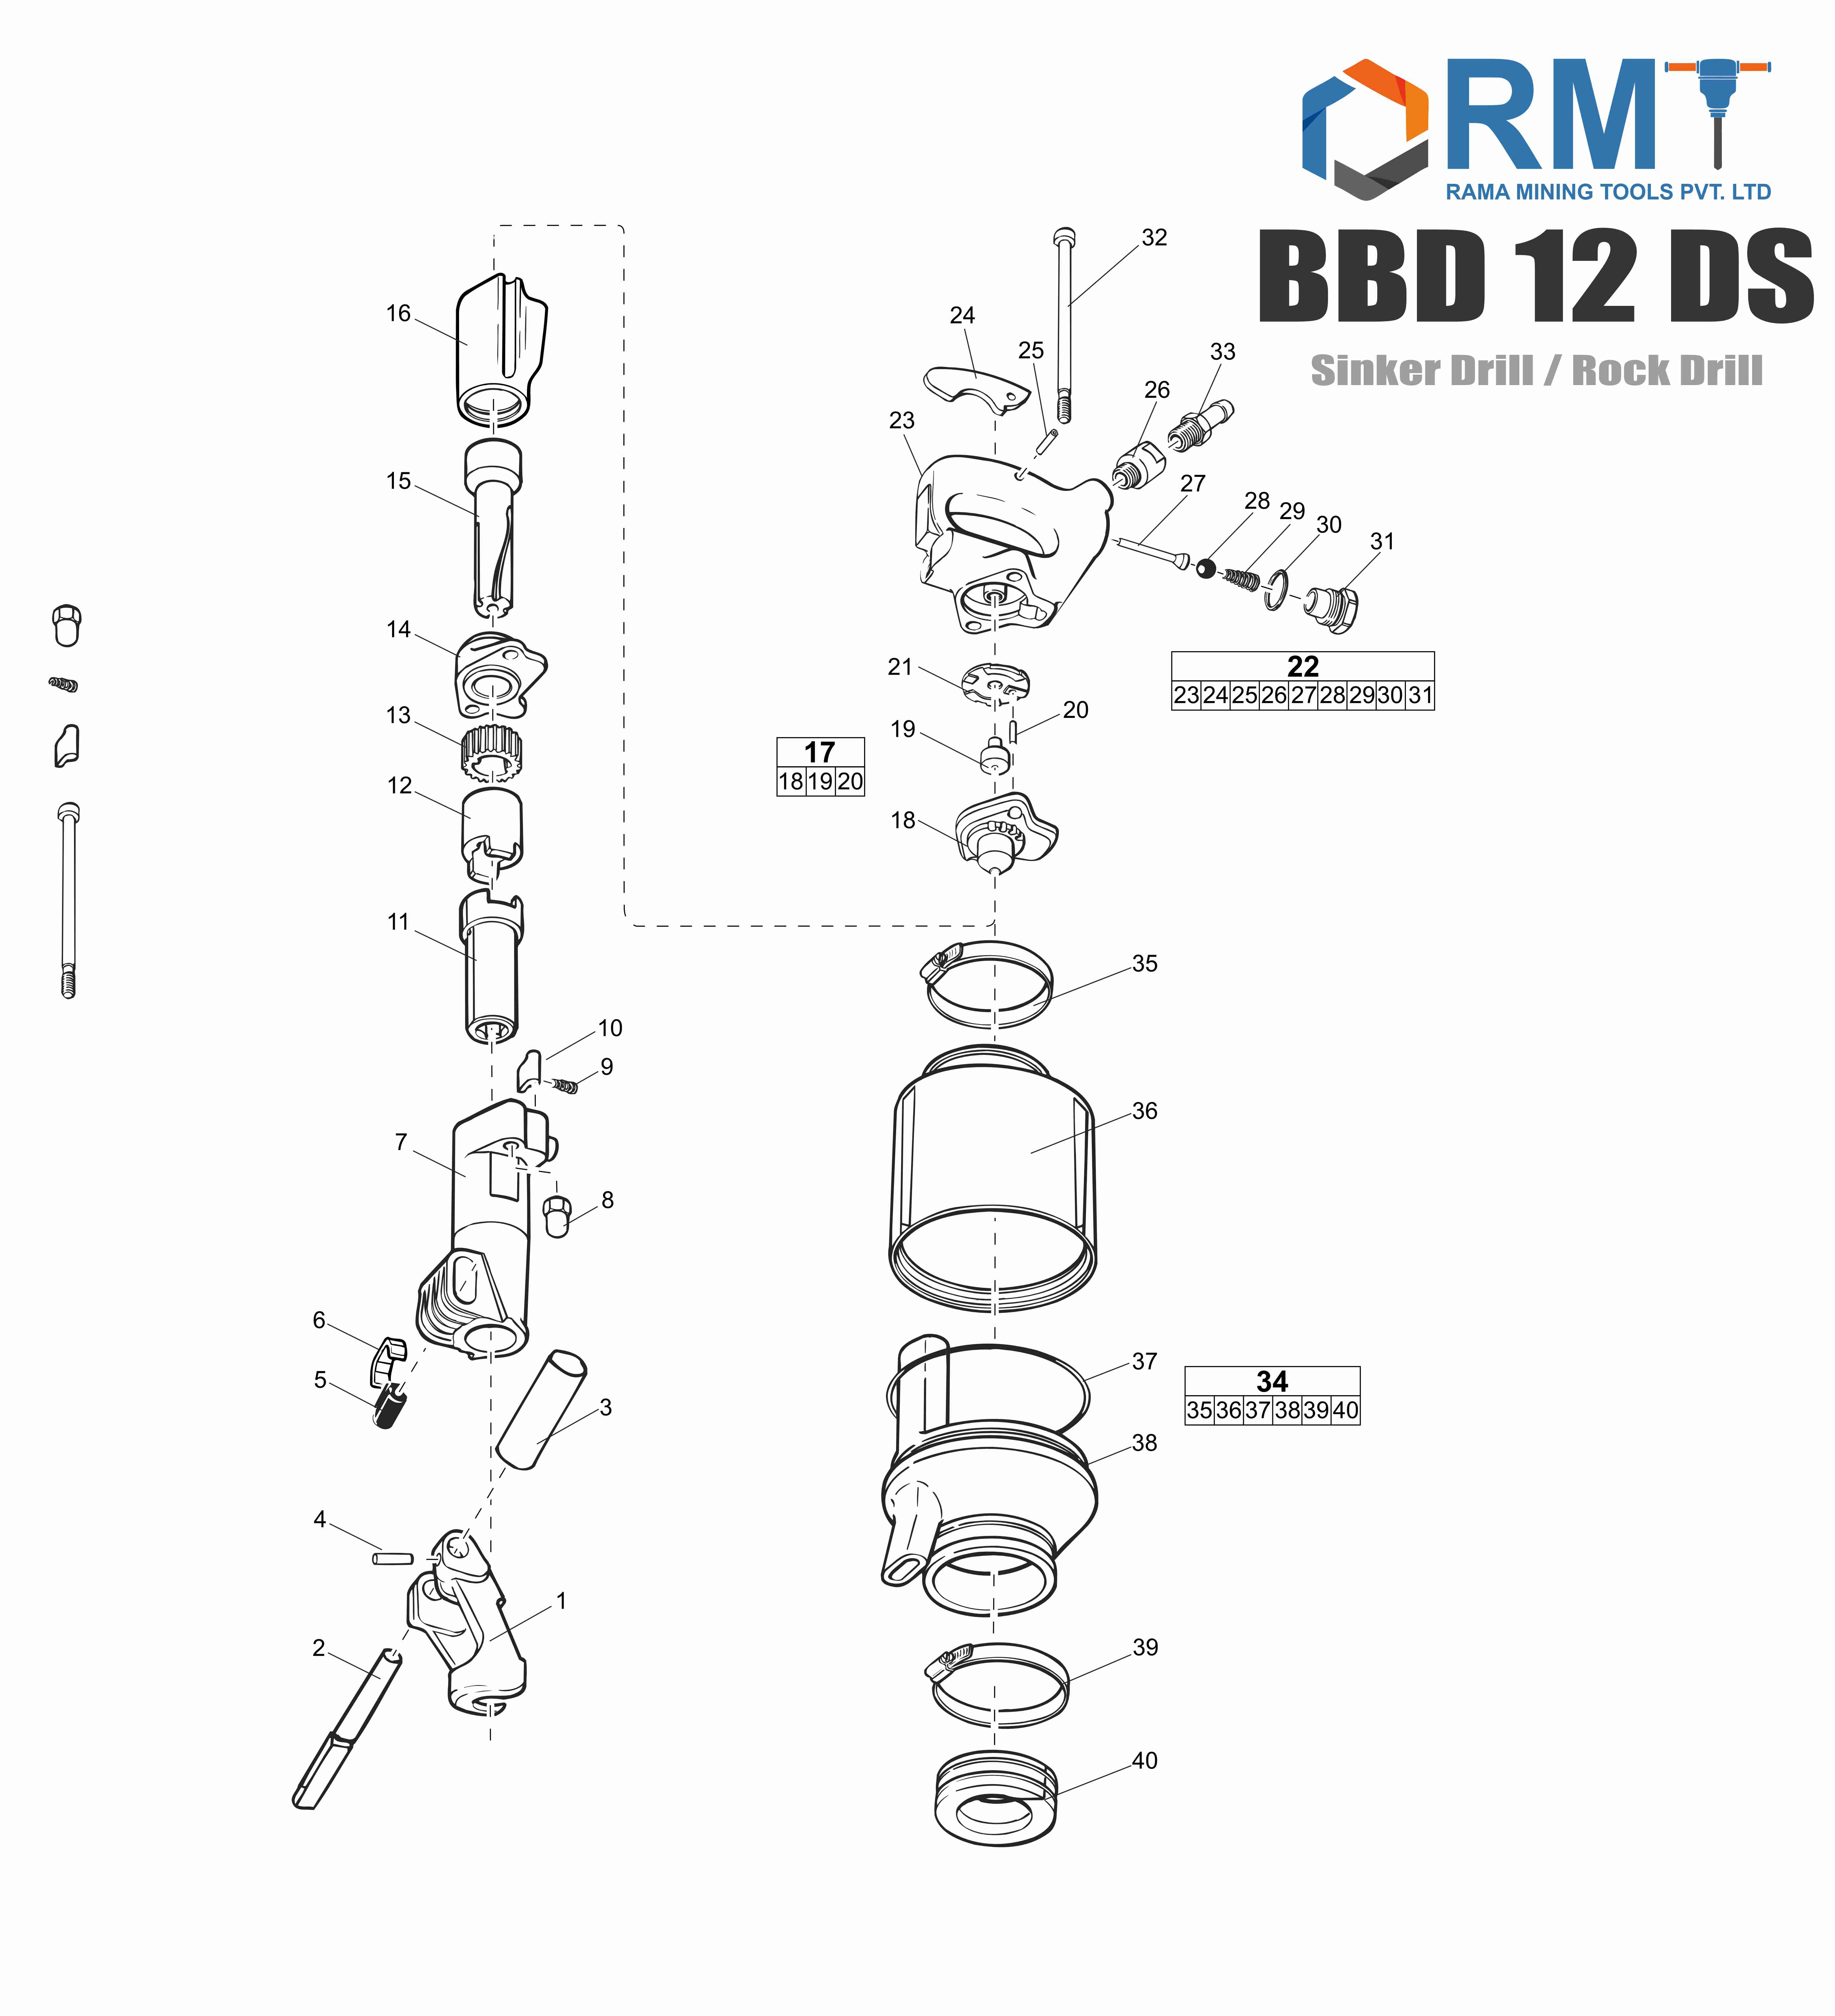 BBD 12 DS - Sinker Drill